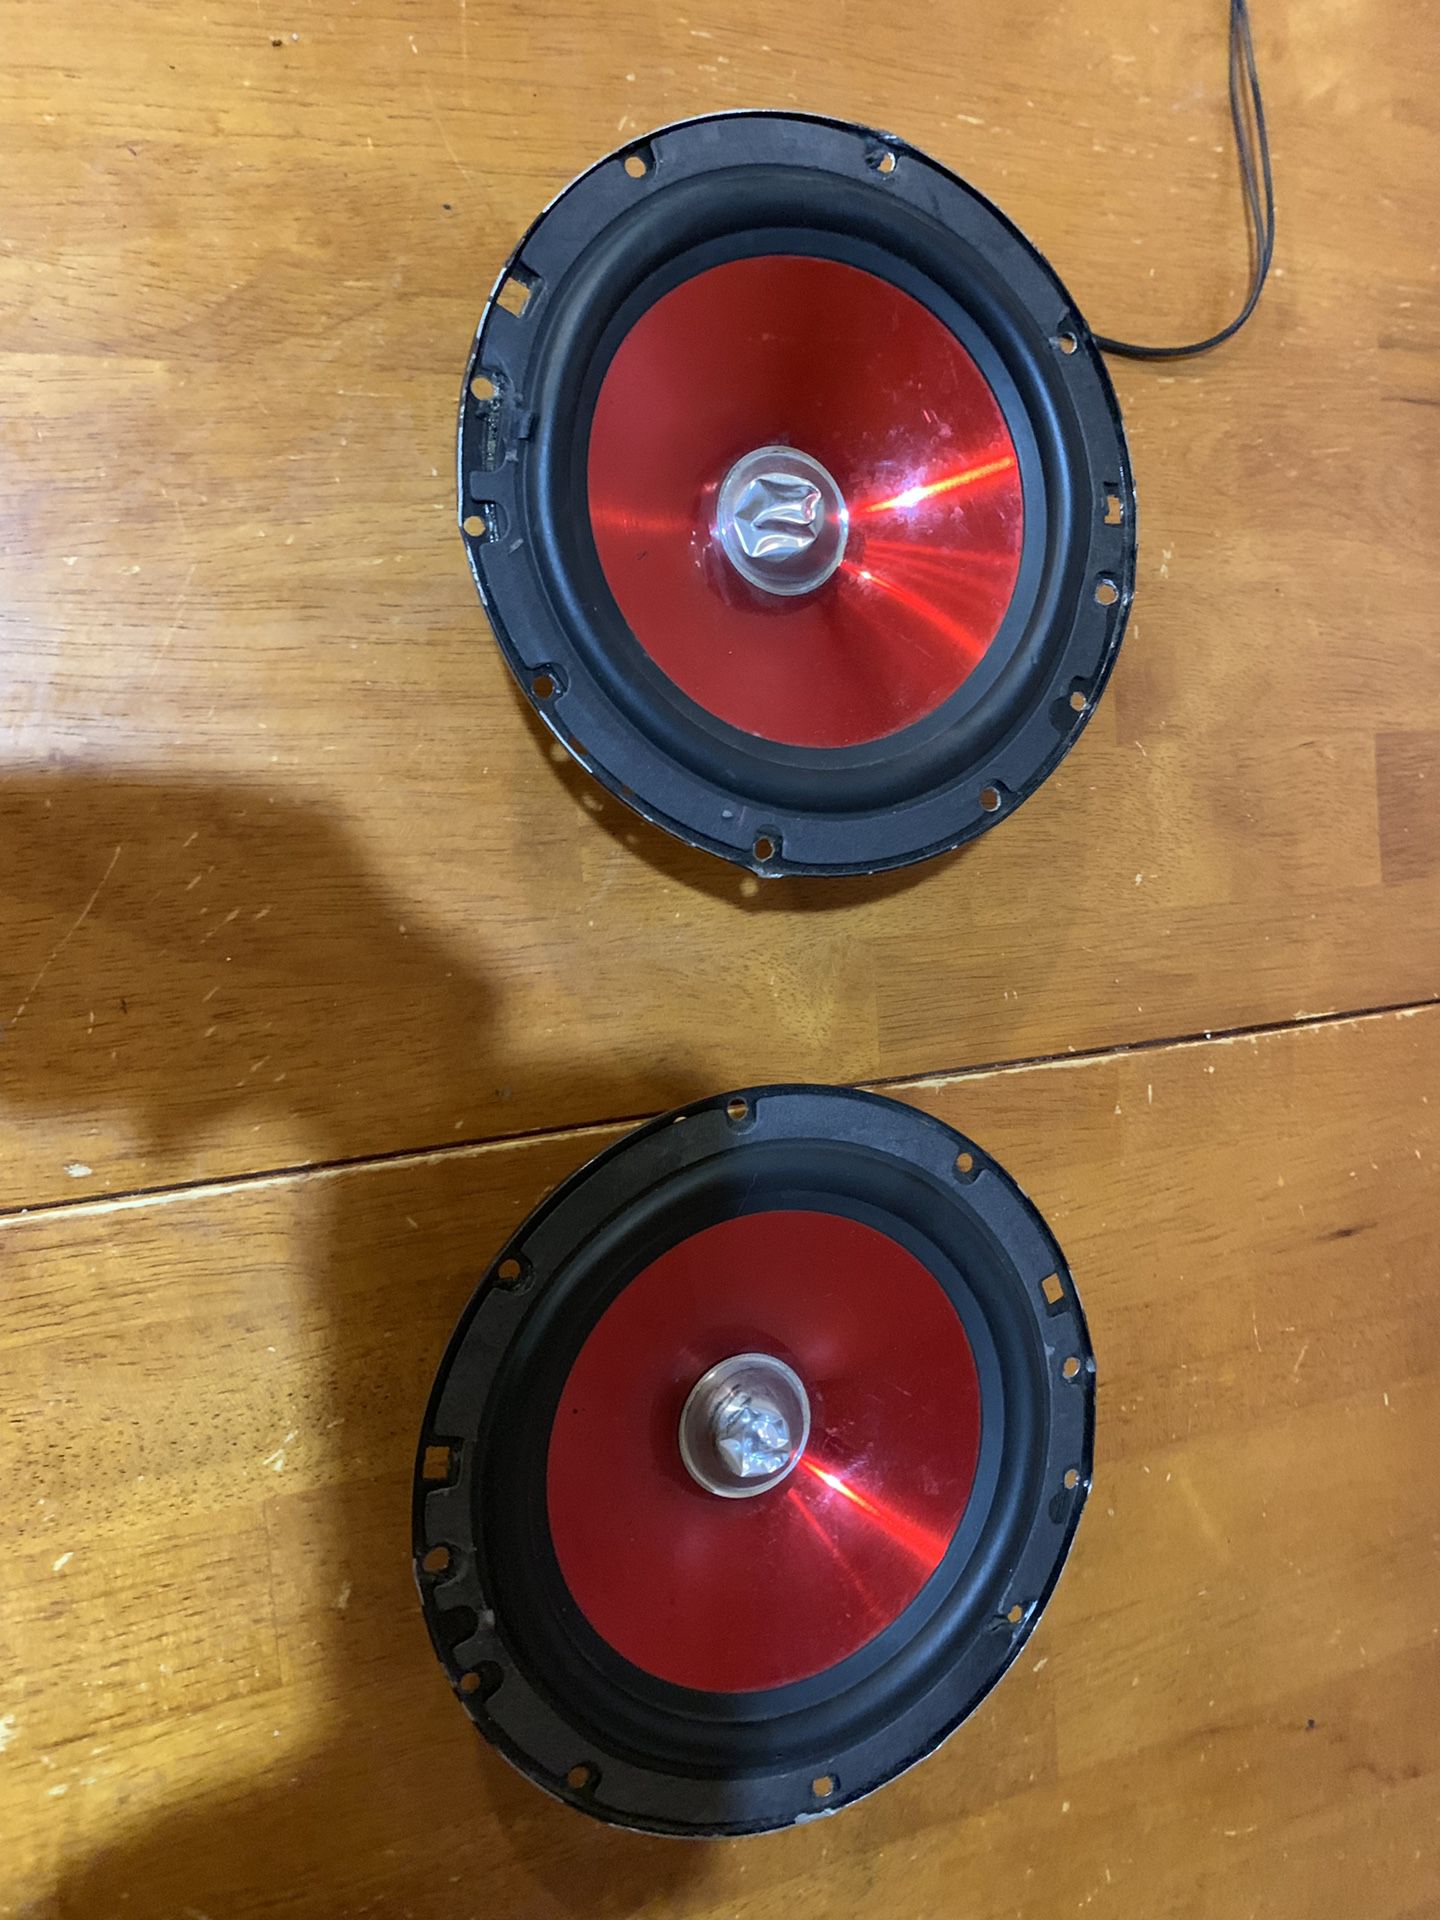 4 speakers